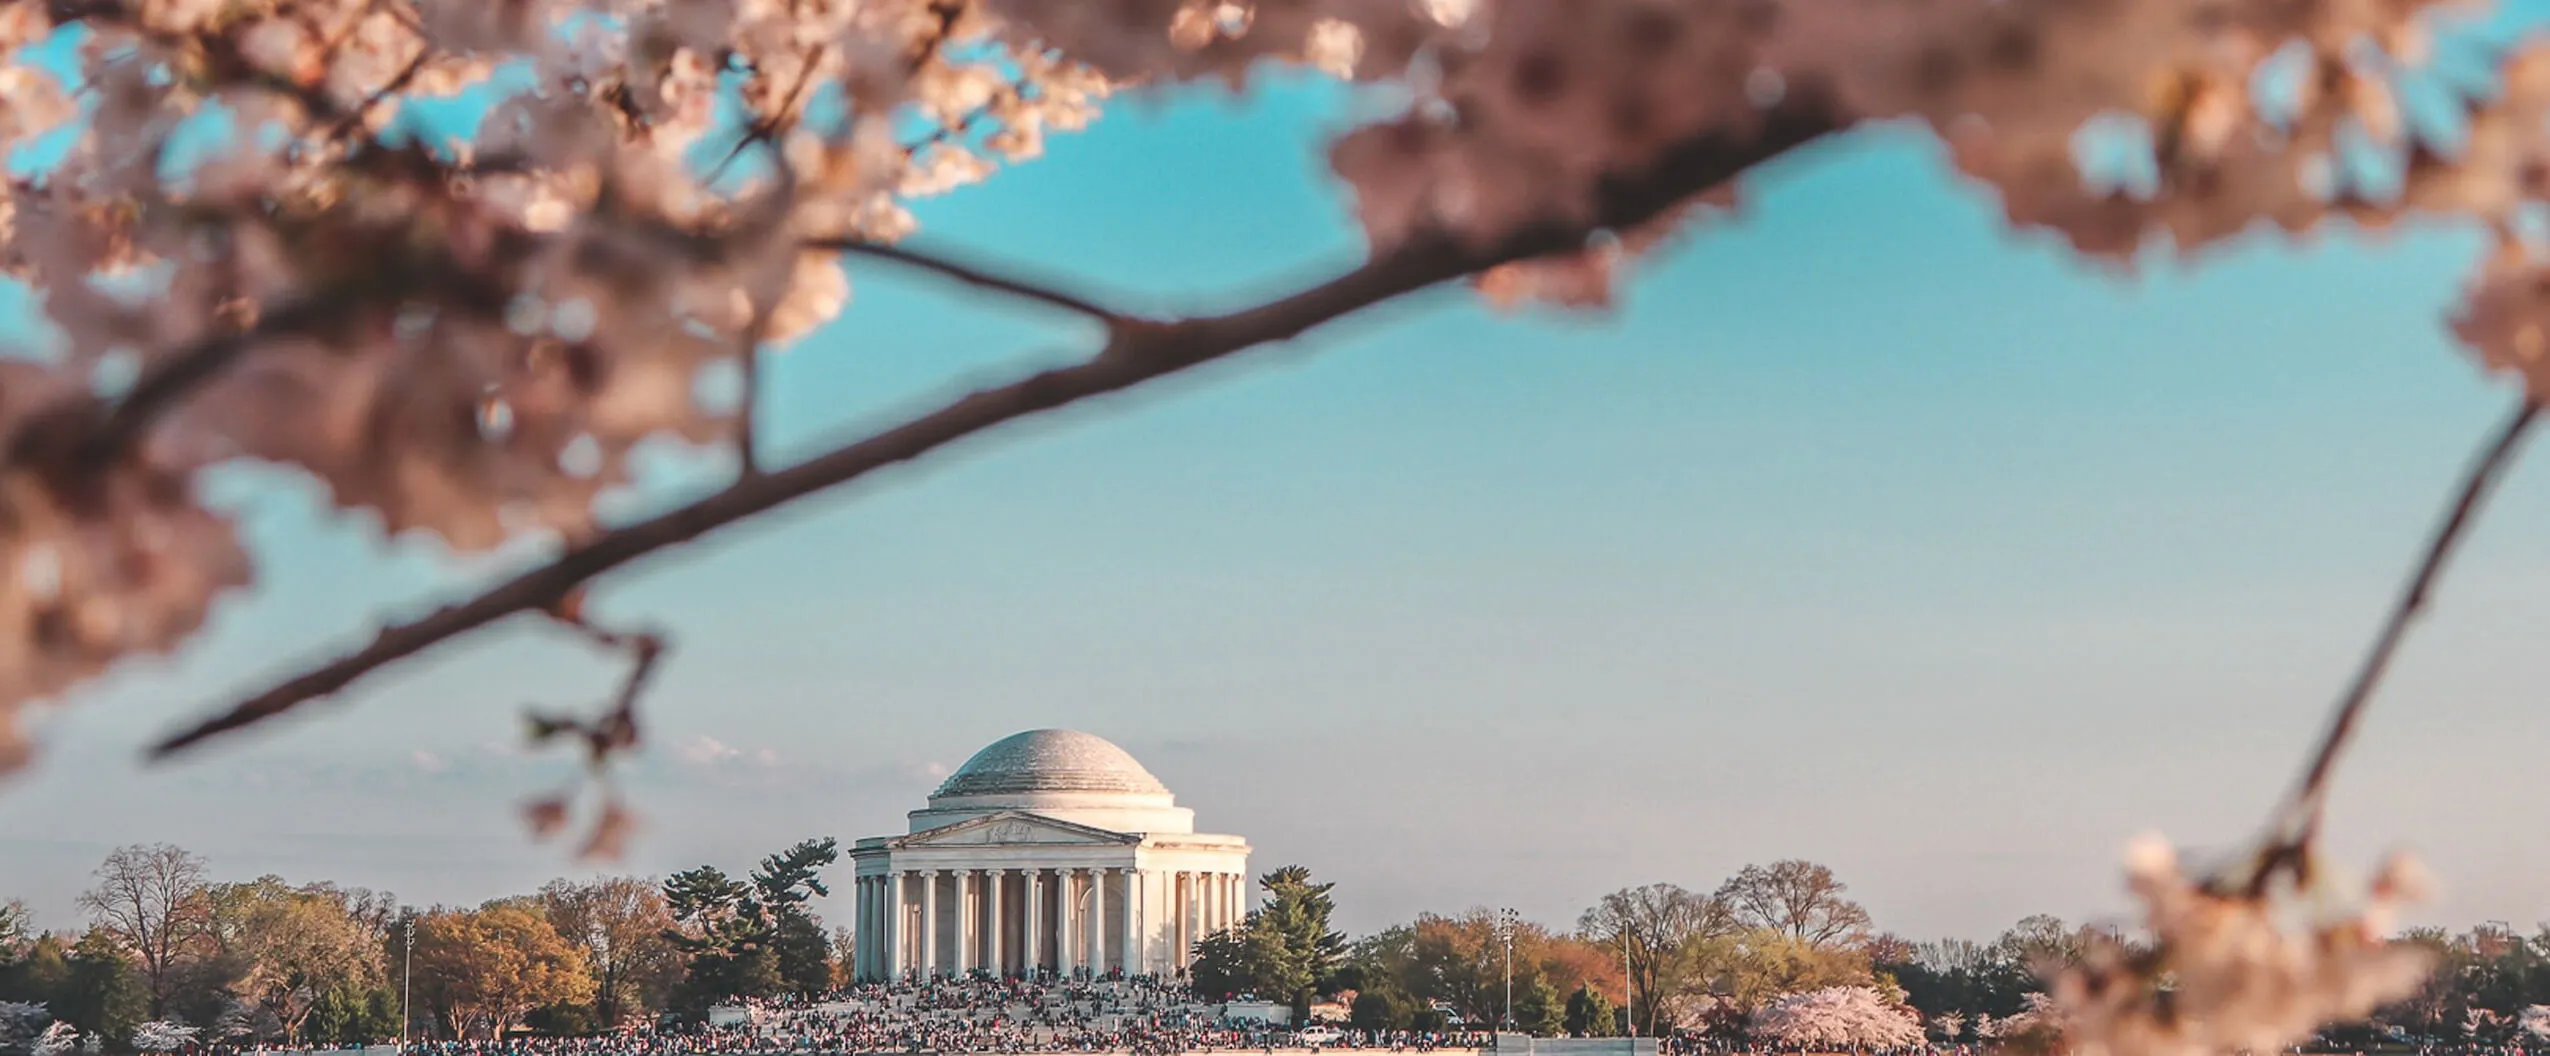 Washington D.C. cherry blossoms